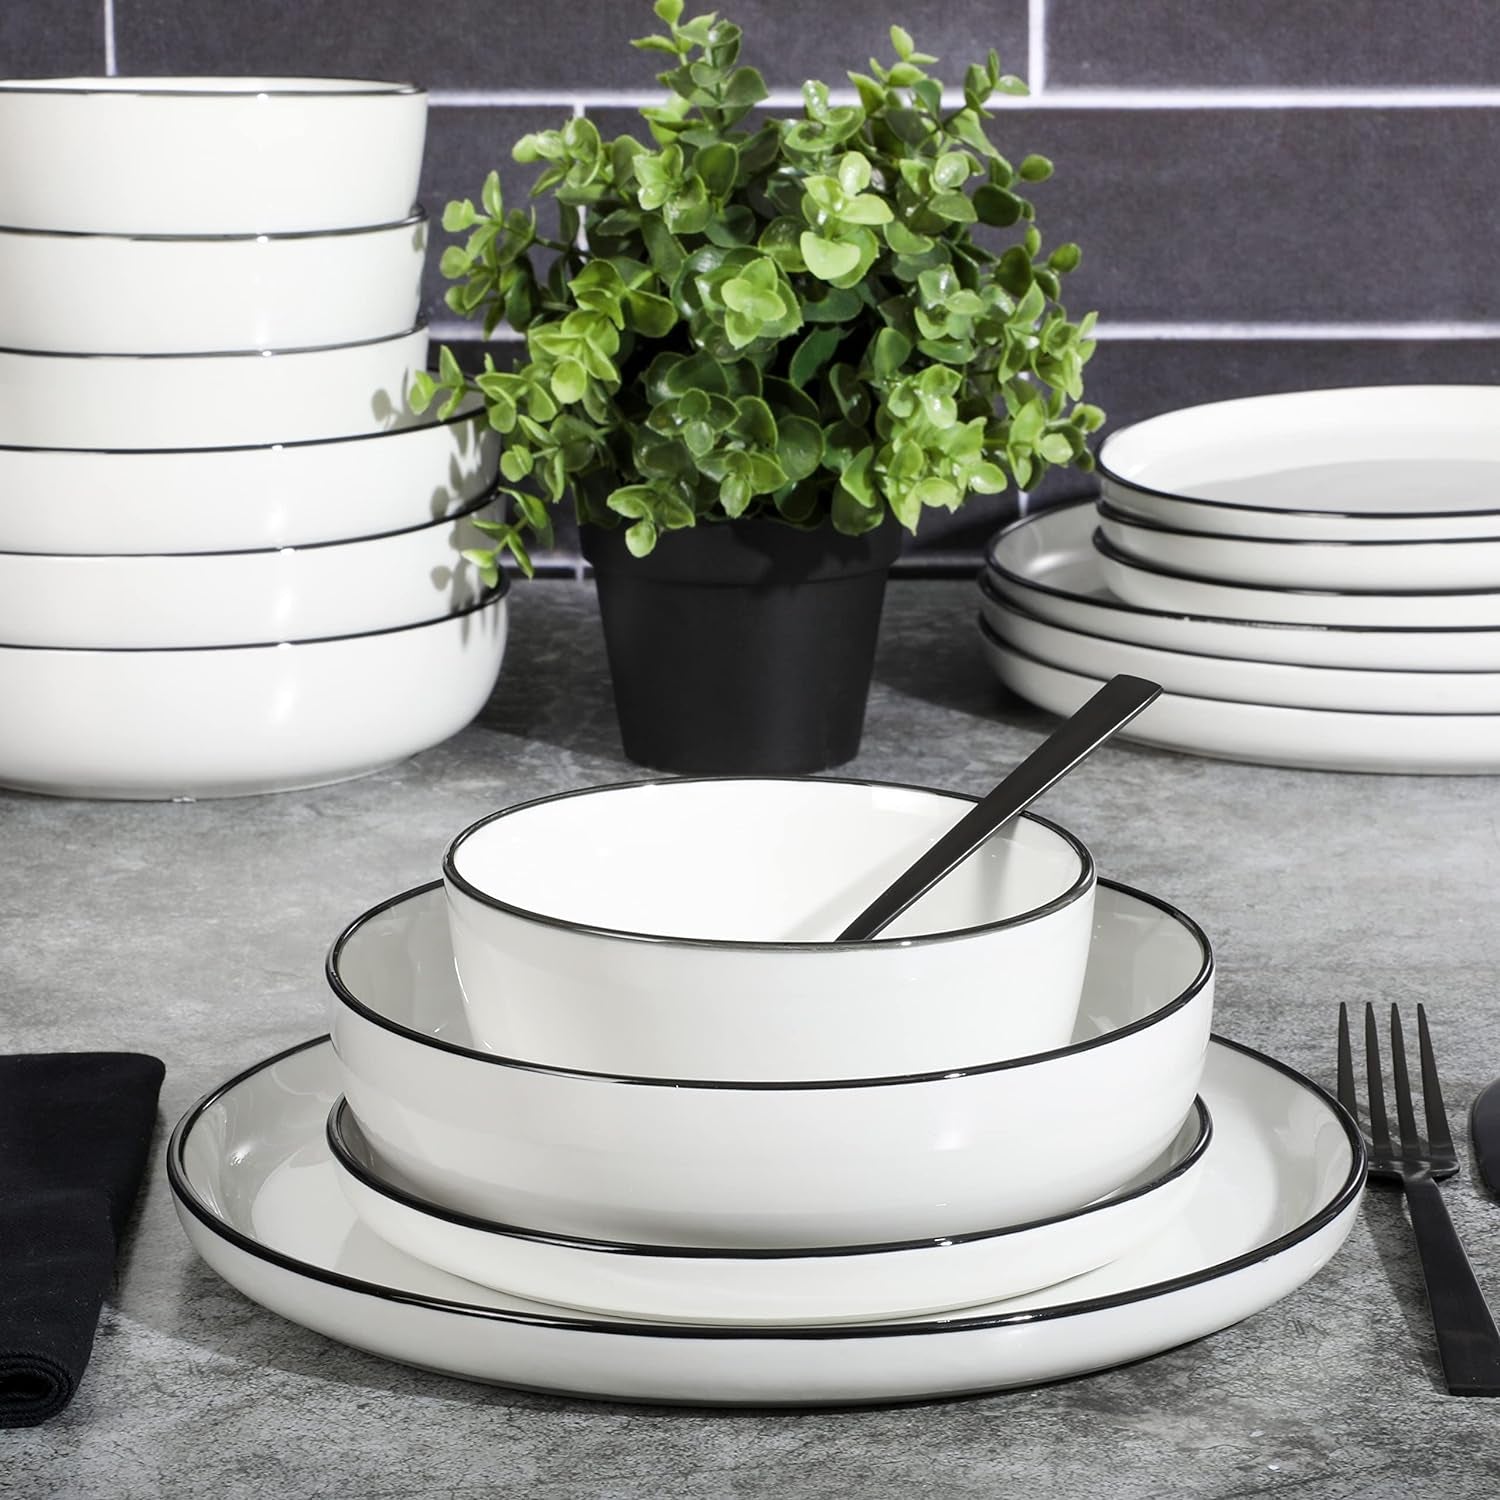 Oslo 16 Piece Porcelain Dinnerware Set, White W/Black Rim, Service for 4 (16Pcs)